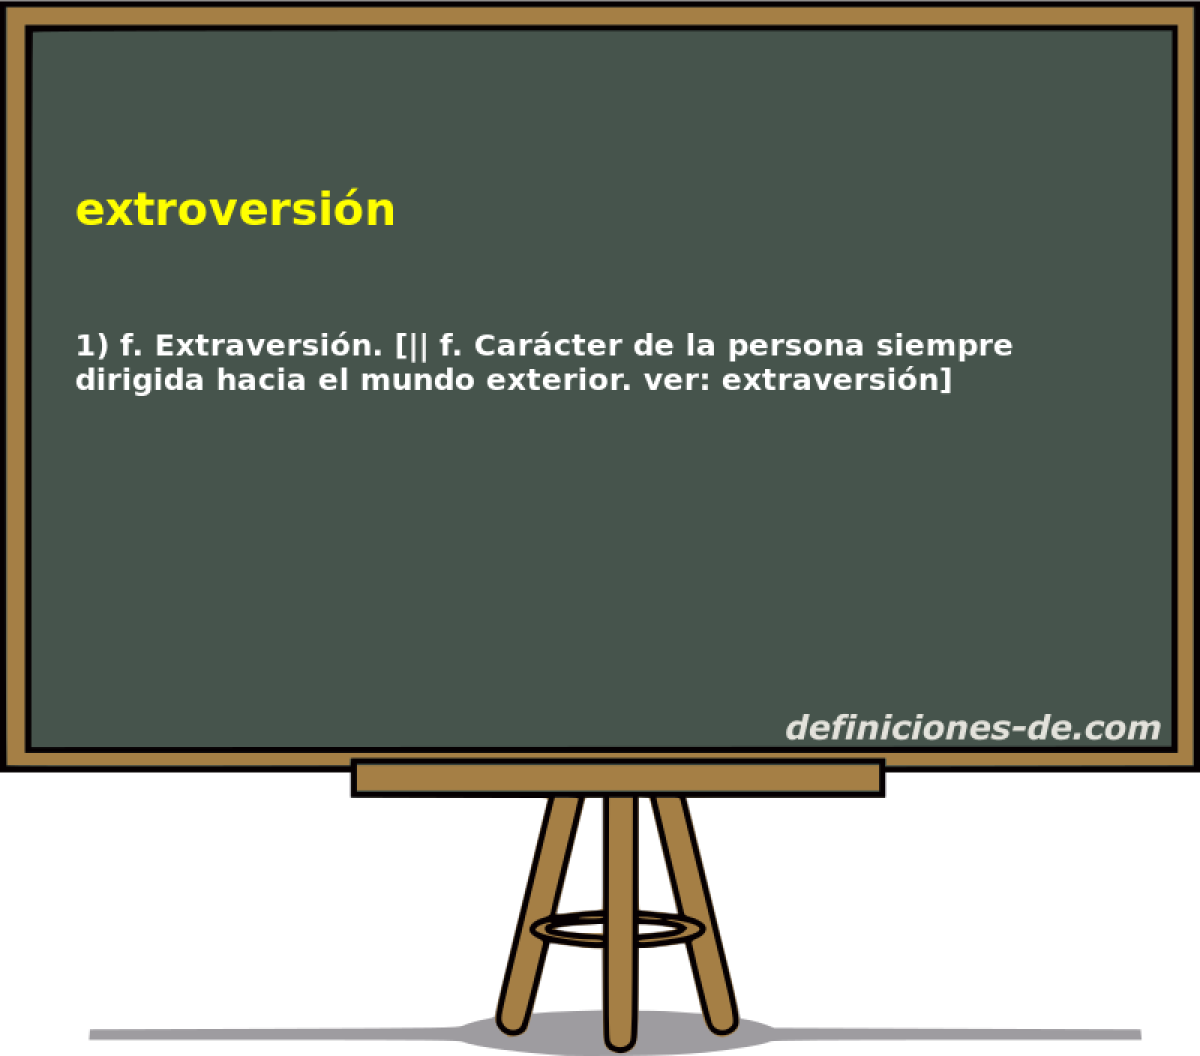 extroversin 